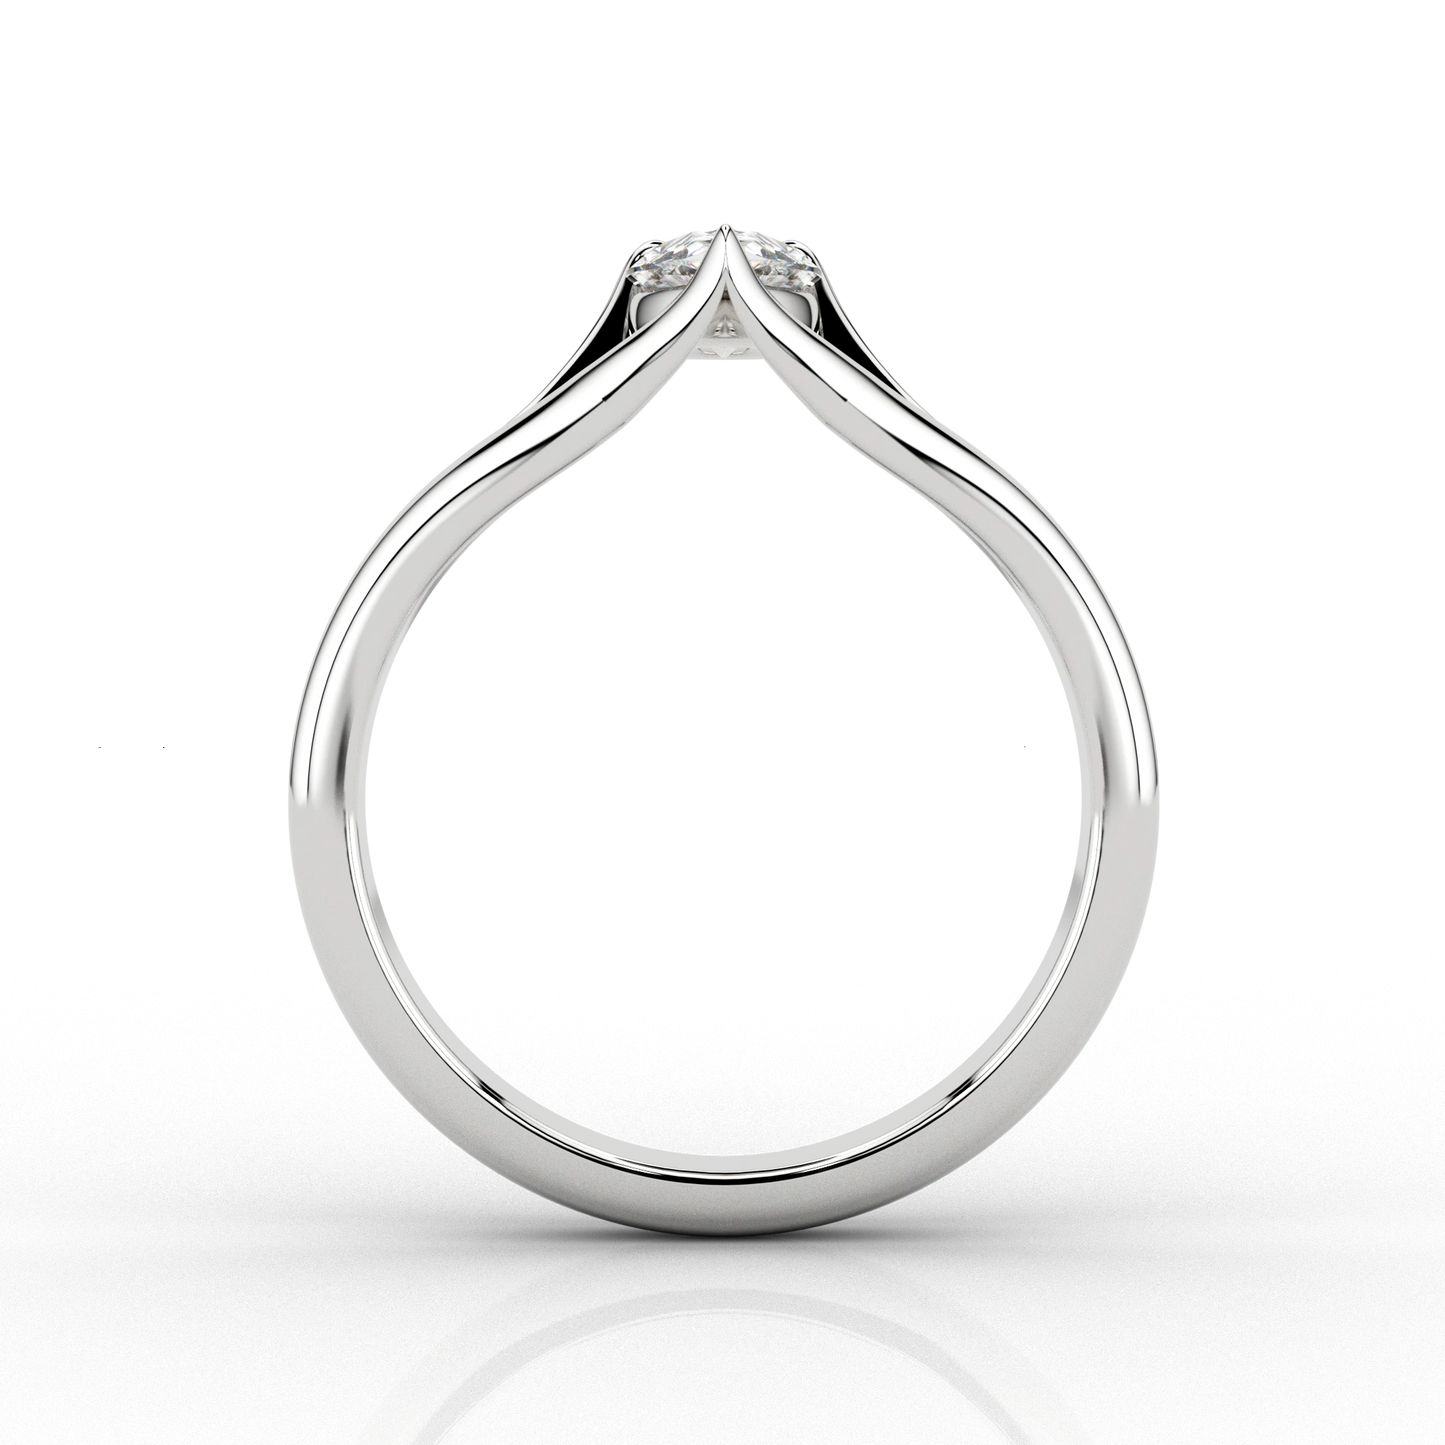 Suspended Pear Cut 0.5ct Ring in Platinum